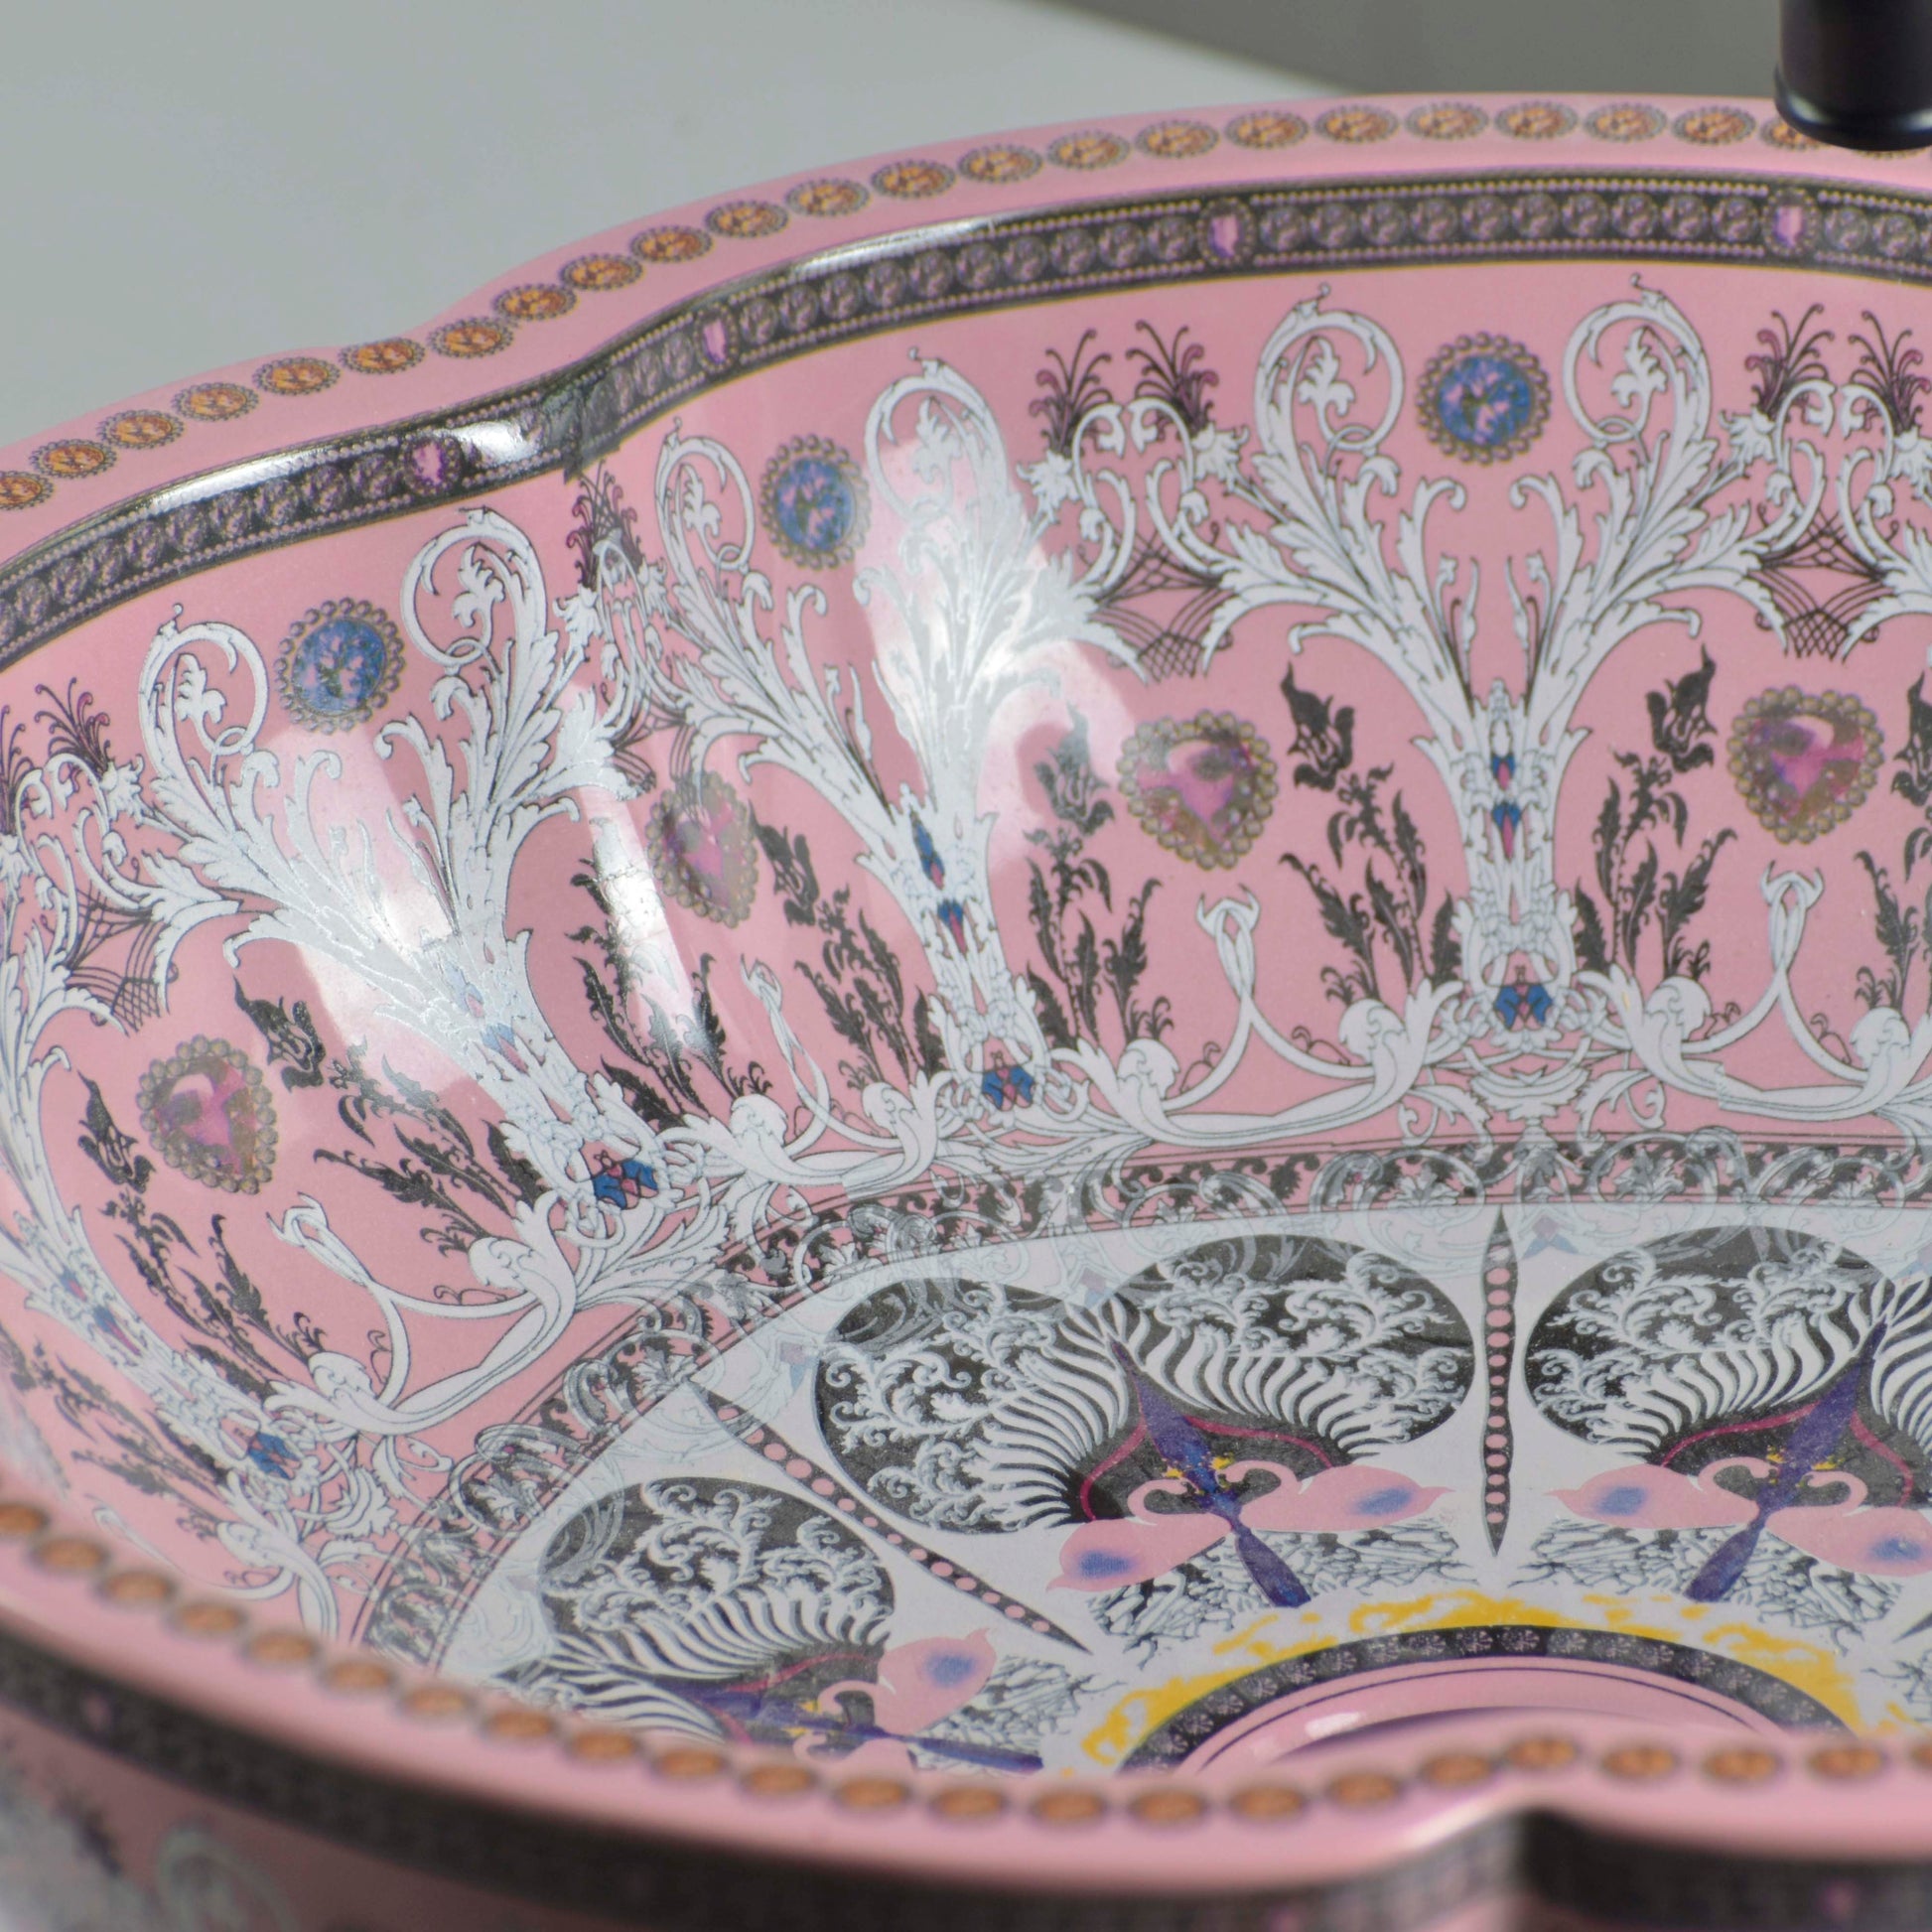 InArt Ceramic Round Wash Basin | European Luxury | TableTop Vessel Sink | Pink Mexican 5 | 41D x 41W x 14H cm - InArt-Studio